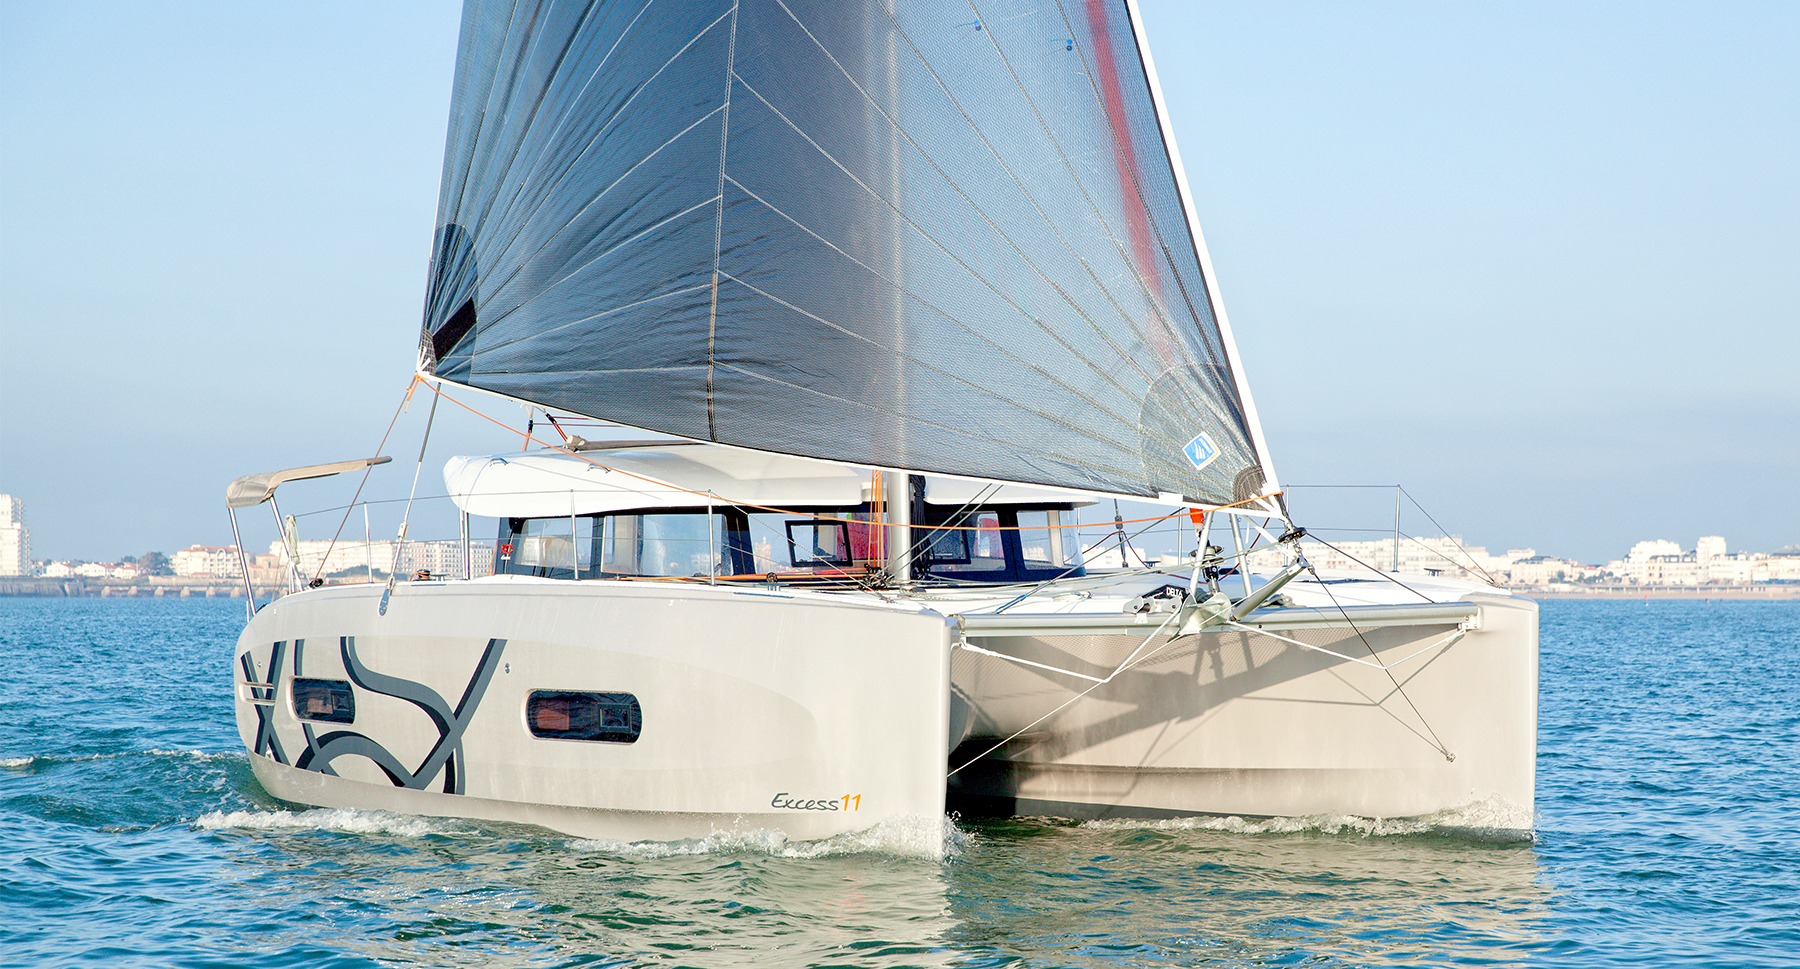 Xcs11 Excess 11 Catamaran For Sale New Boat Dealer Sailing